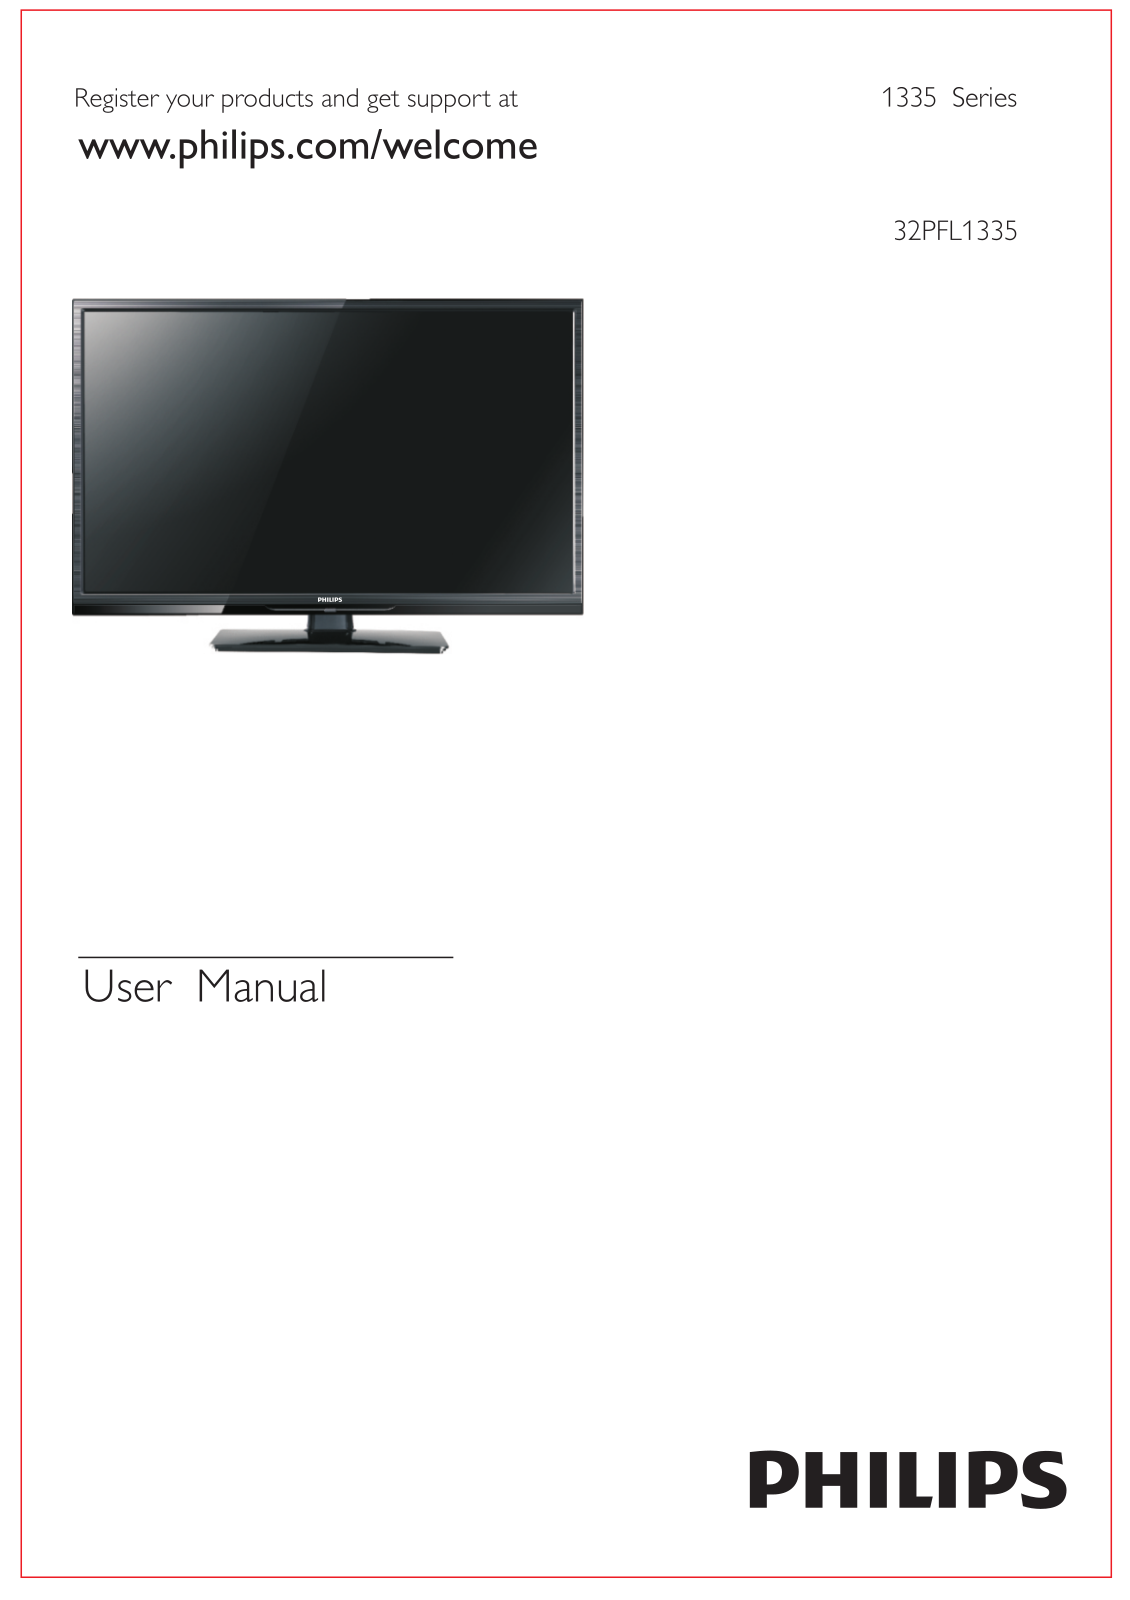 Philips 32PFL1335S User Manual